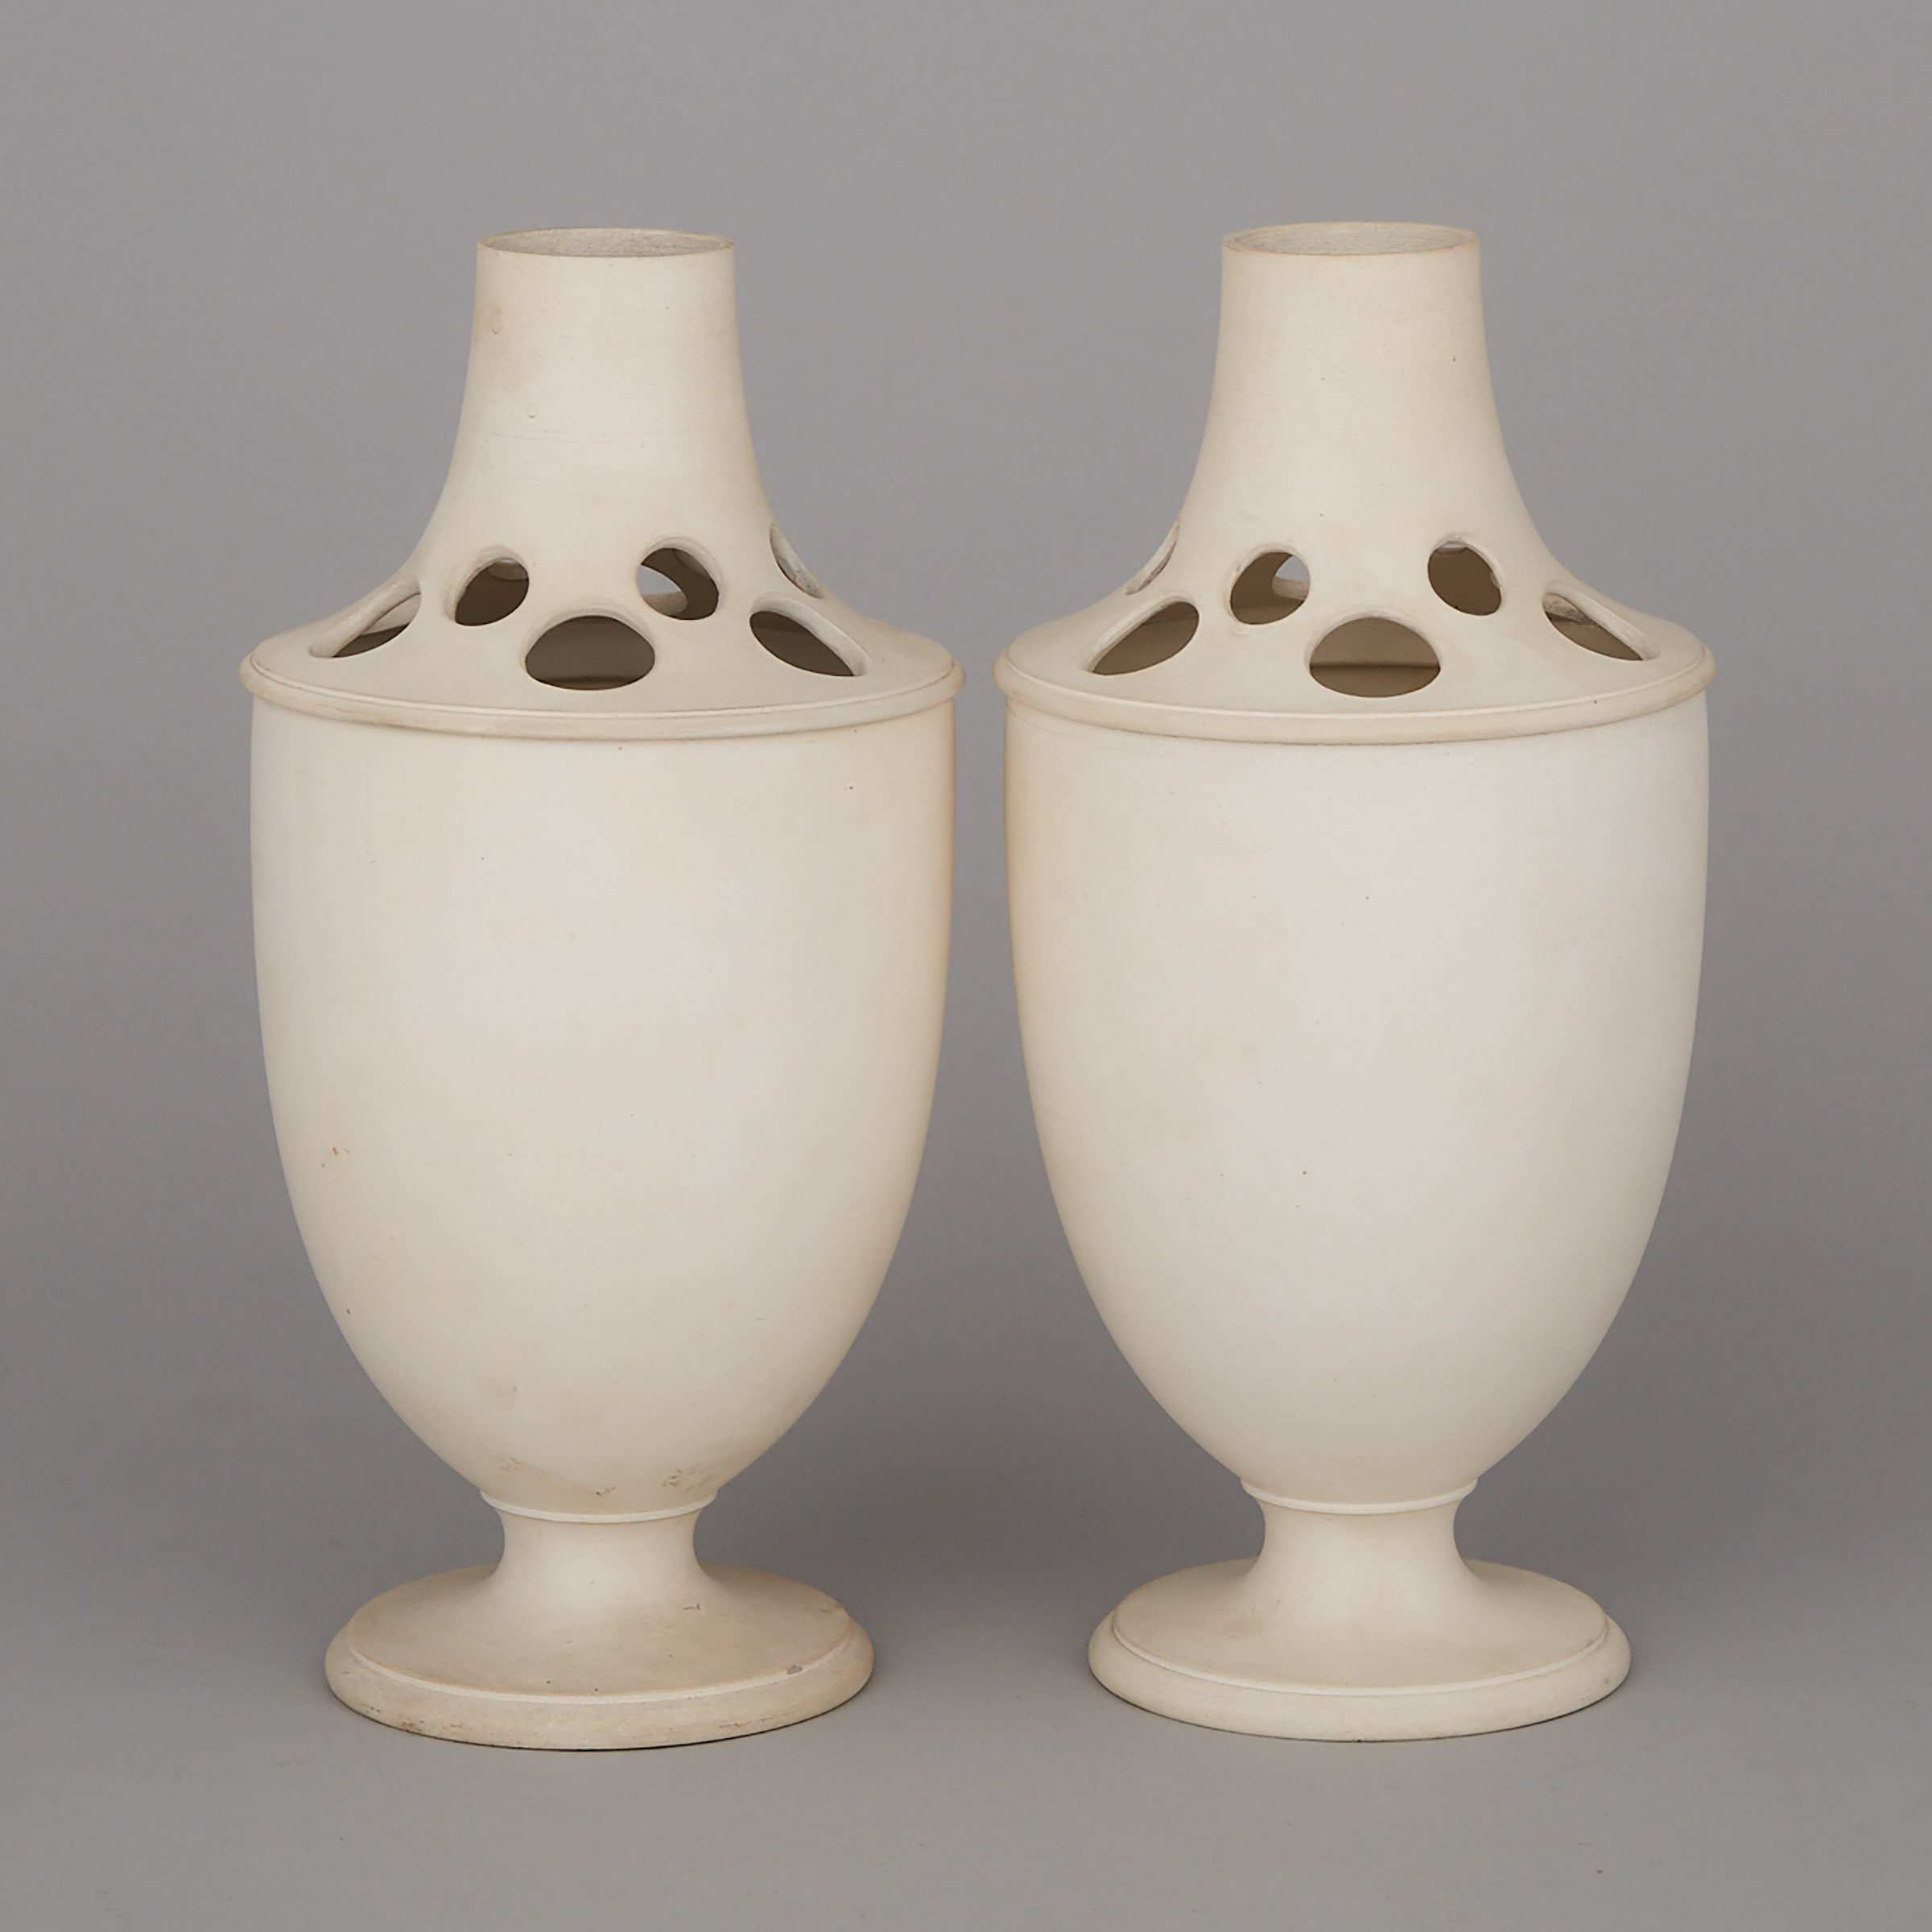 Pair of Plain White Jasper Bough Pots with Covers, c.1800